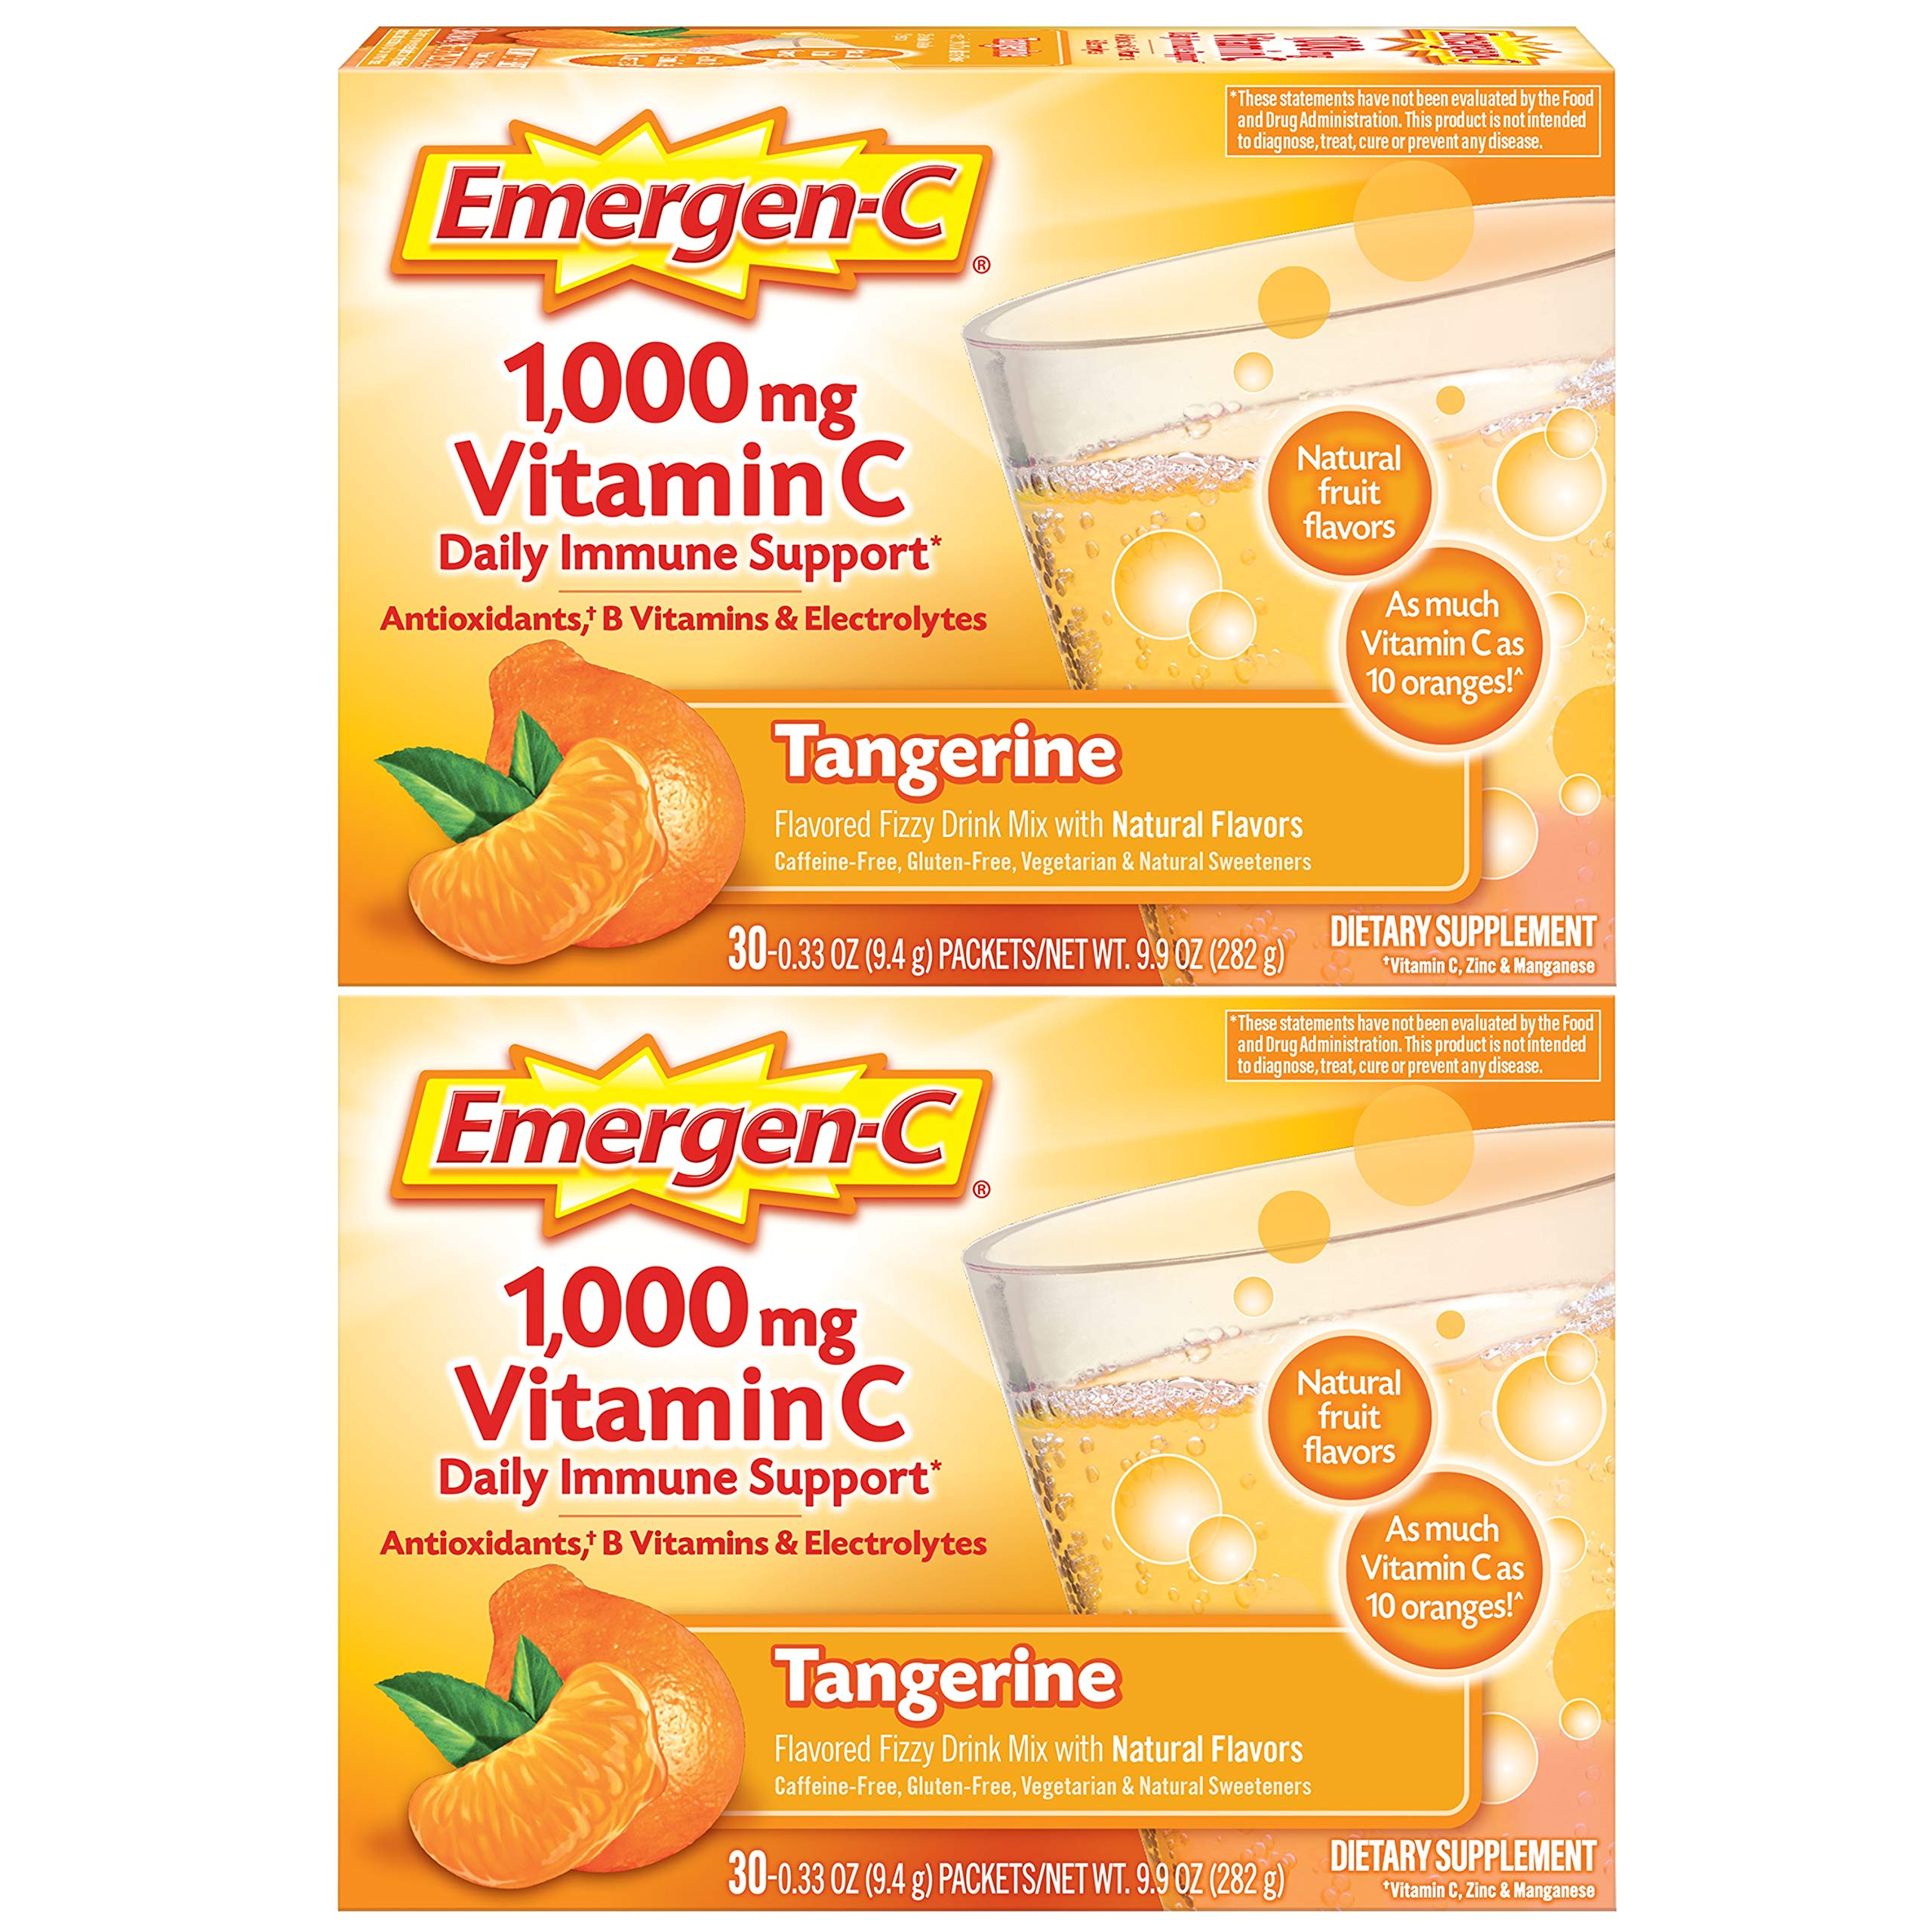 Emergen-C Vitamin C Powder, with Antioxidants, B Vitamins and Electrolytes, Vitamin C Supplements for Immune Support, Caffeine Free Drink Mix, Tangerine Flavor - 60 Count/2 Month Supply